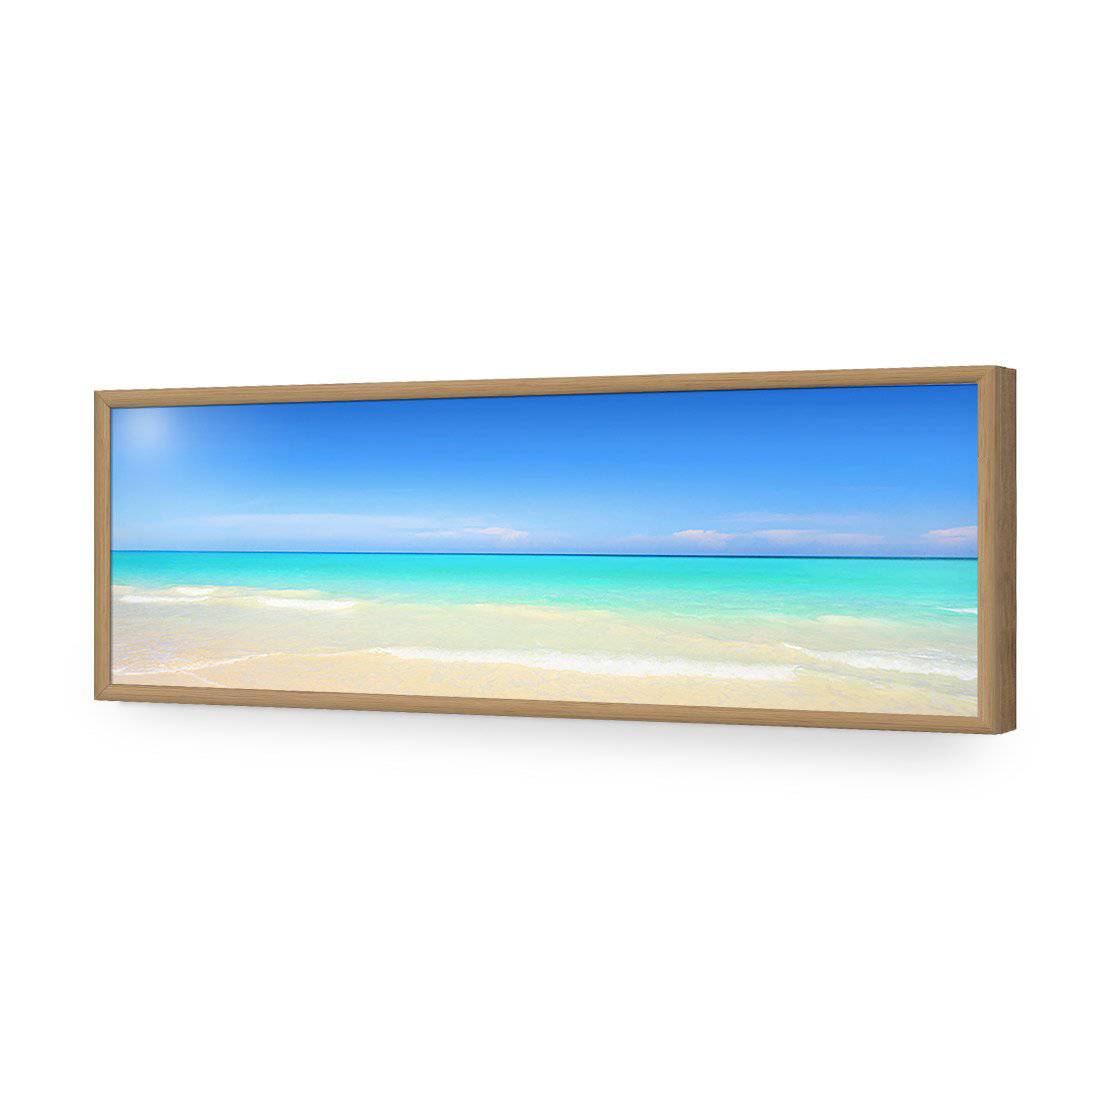 Paradise Beach, Long-Acrylic-Wall Art Design-Without Border-Acrylic - Oak Frame-60x20cm-Wall Art Designs